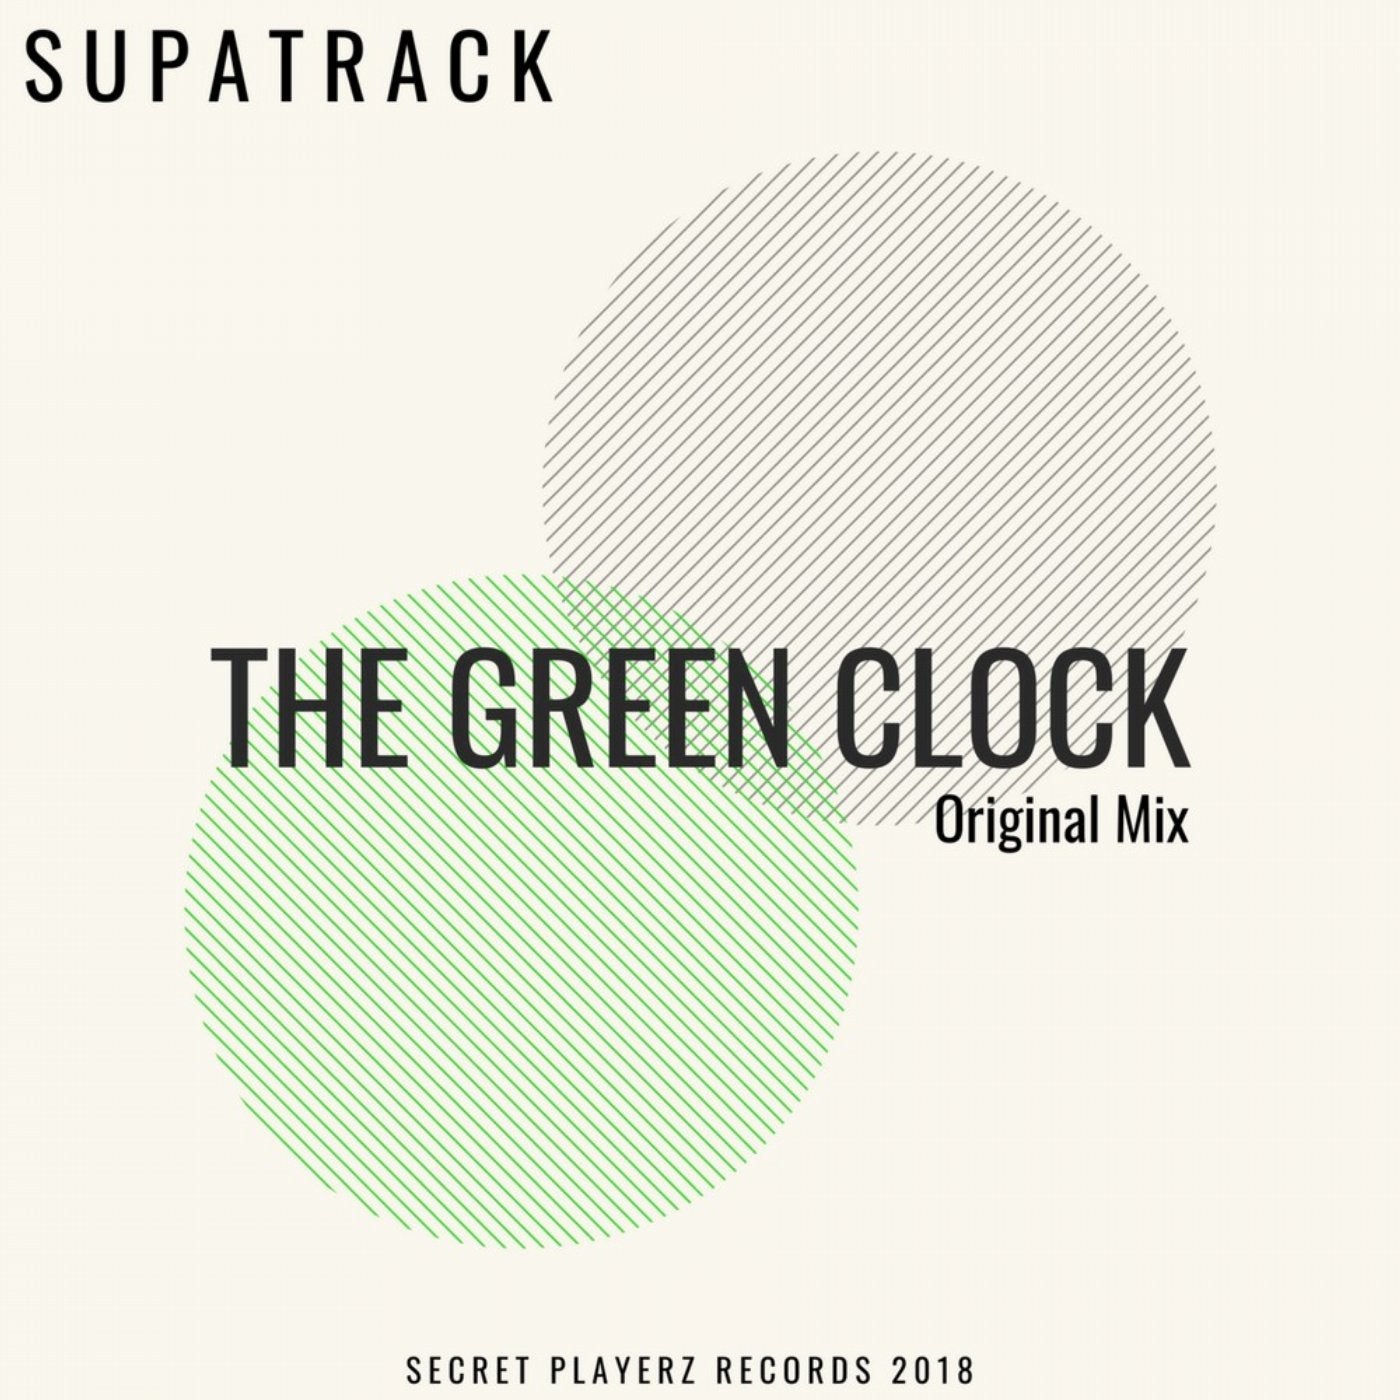 The Green Clock